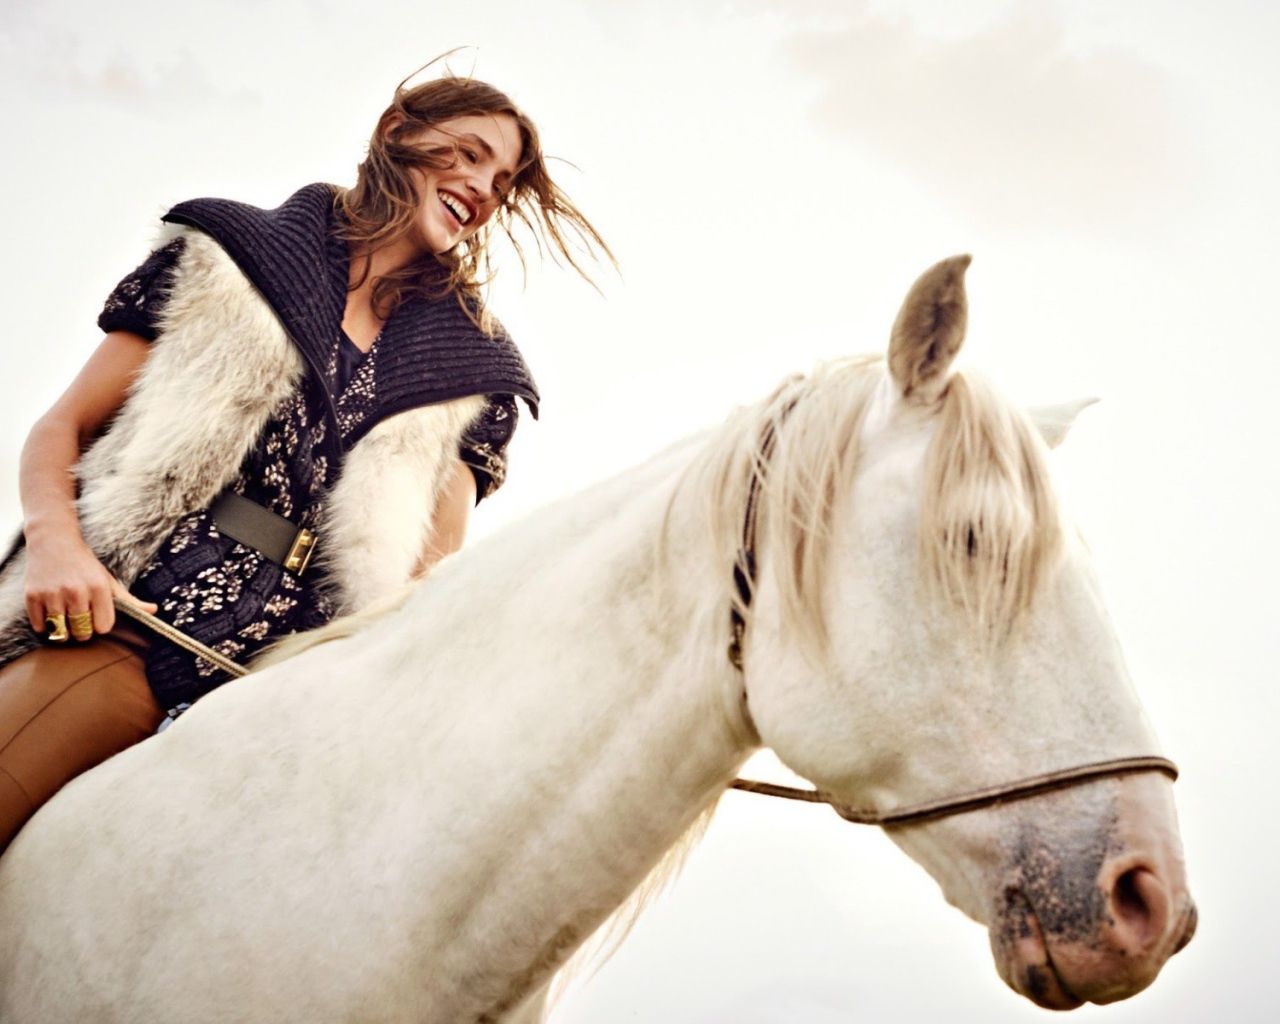 penthouse magazine horse riding girl photos